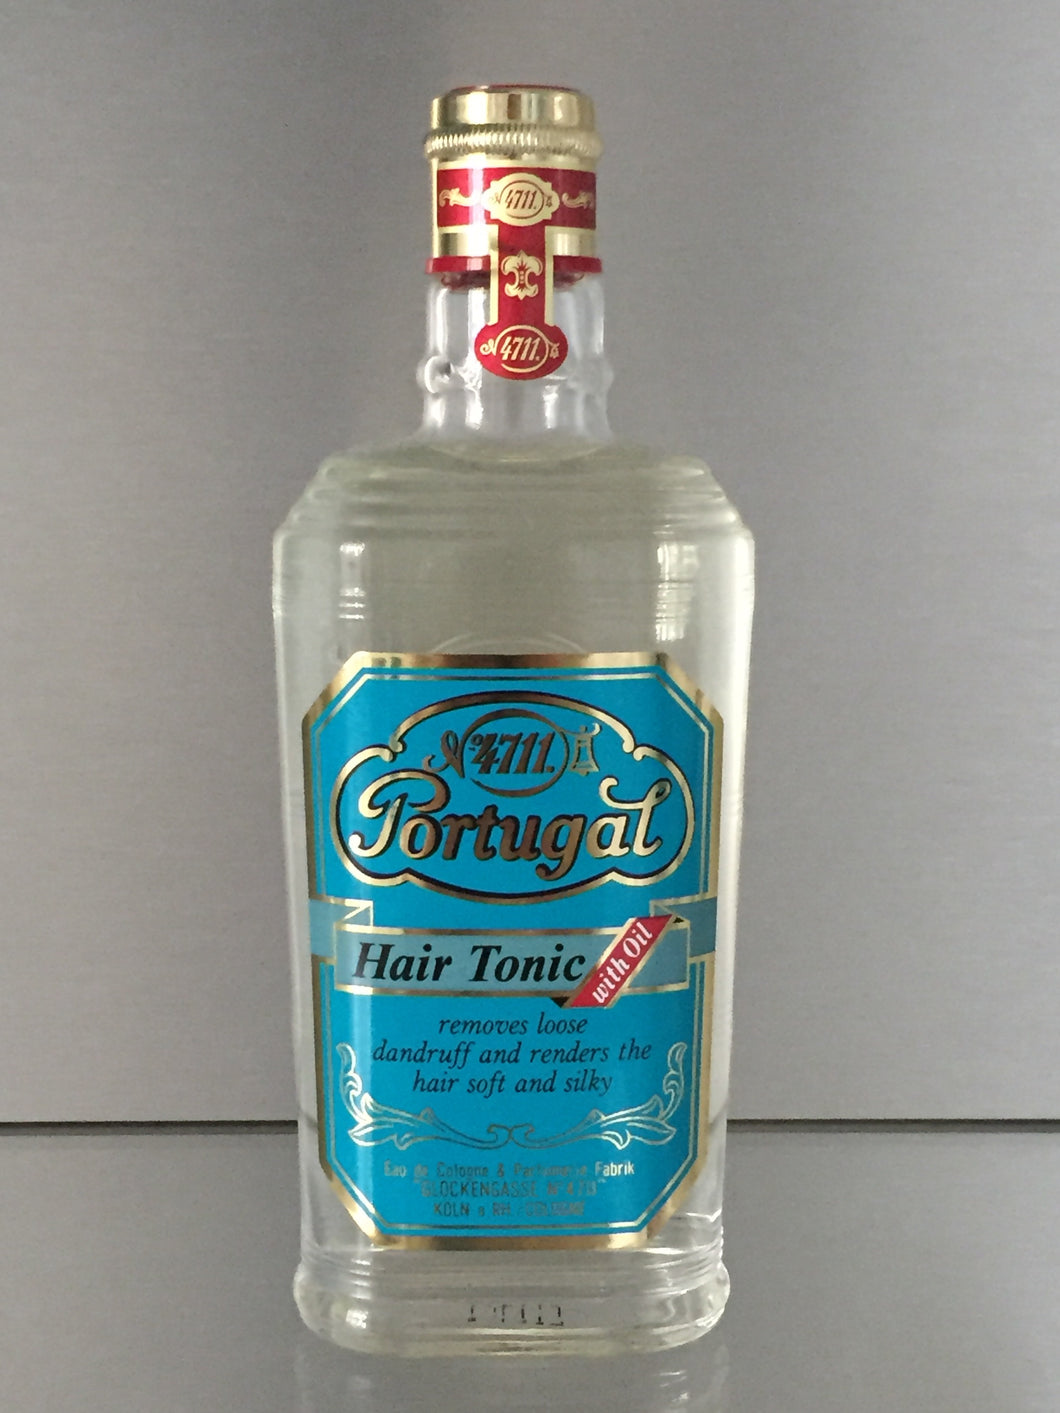 PORTUGAL, Hair Tonic with Oil, 150ml (splash) - 4711 